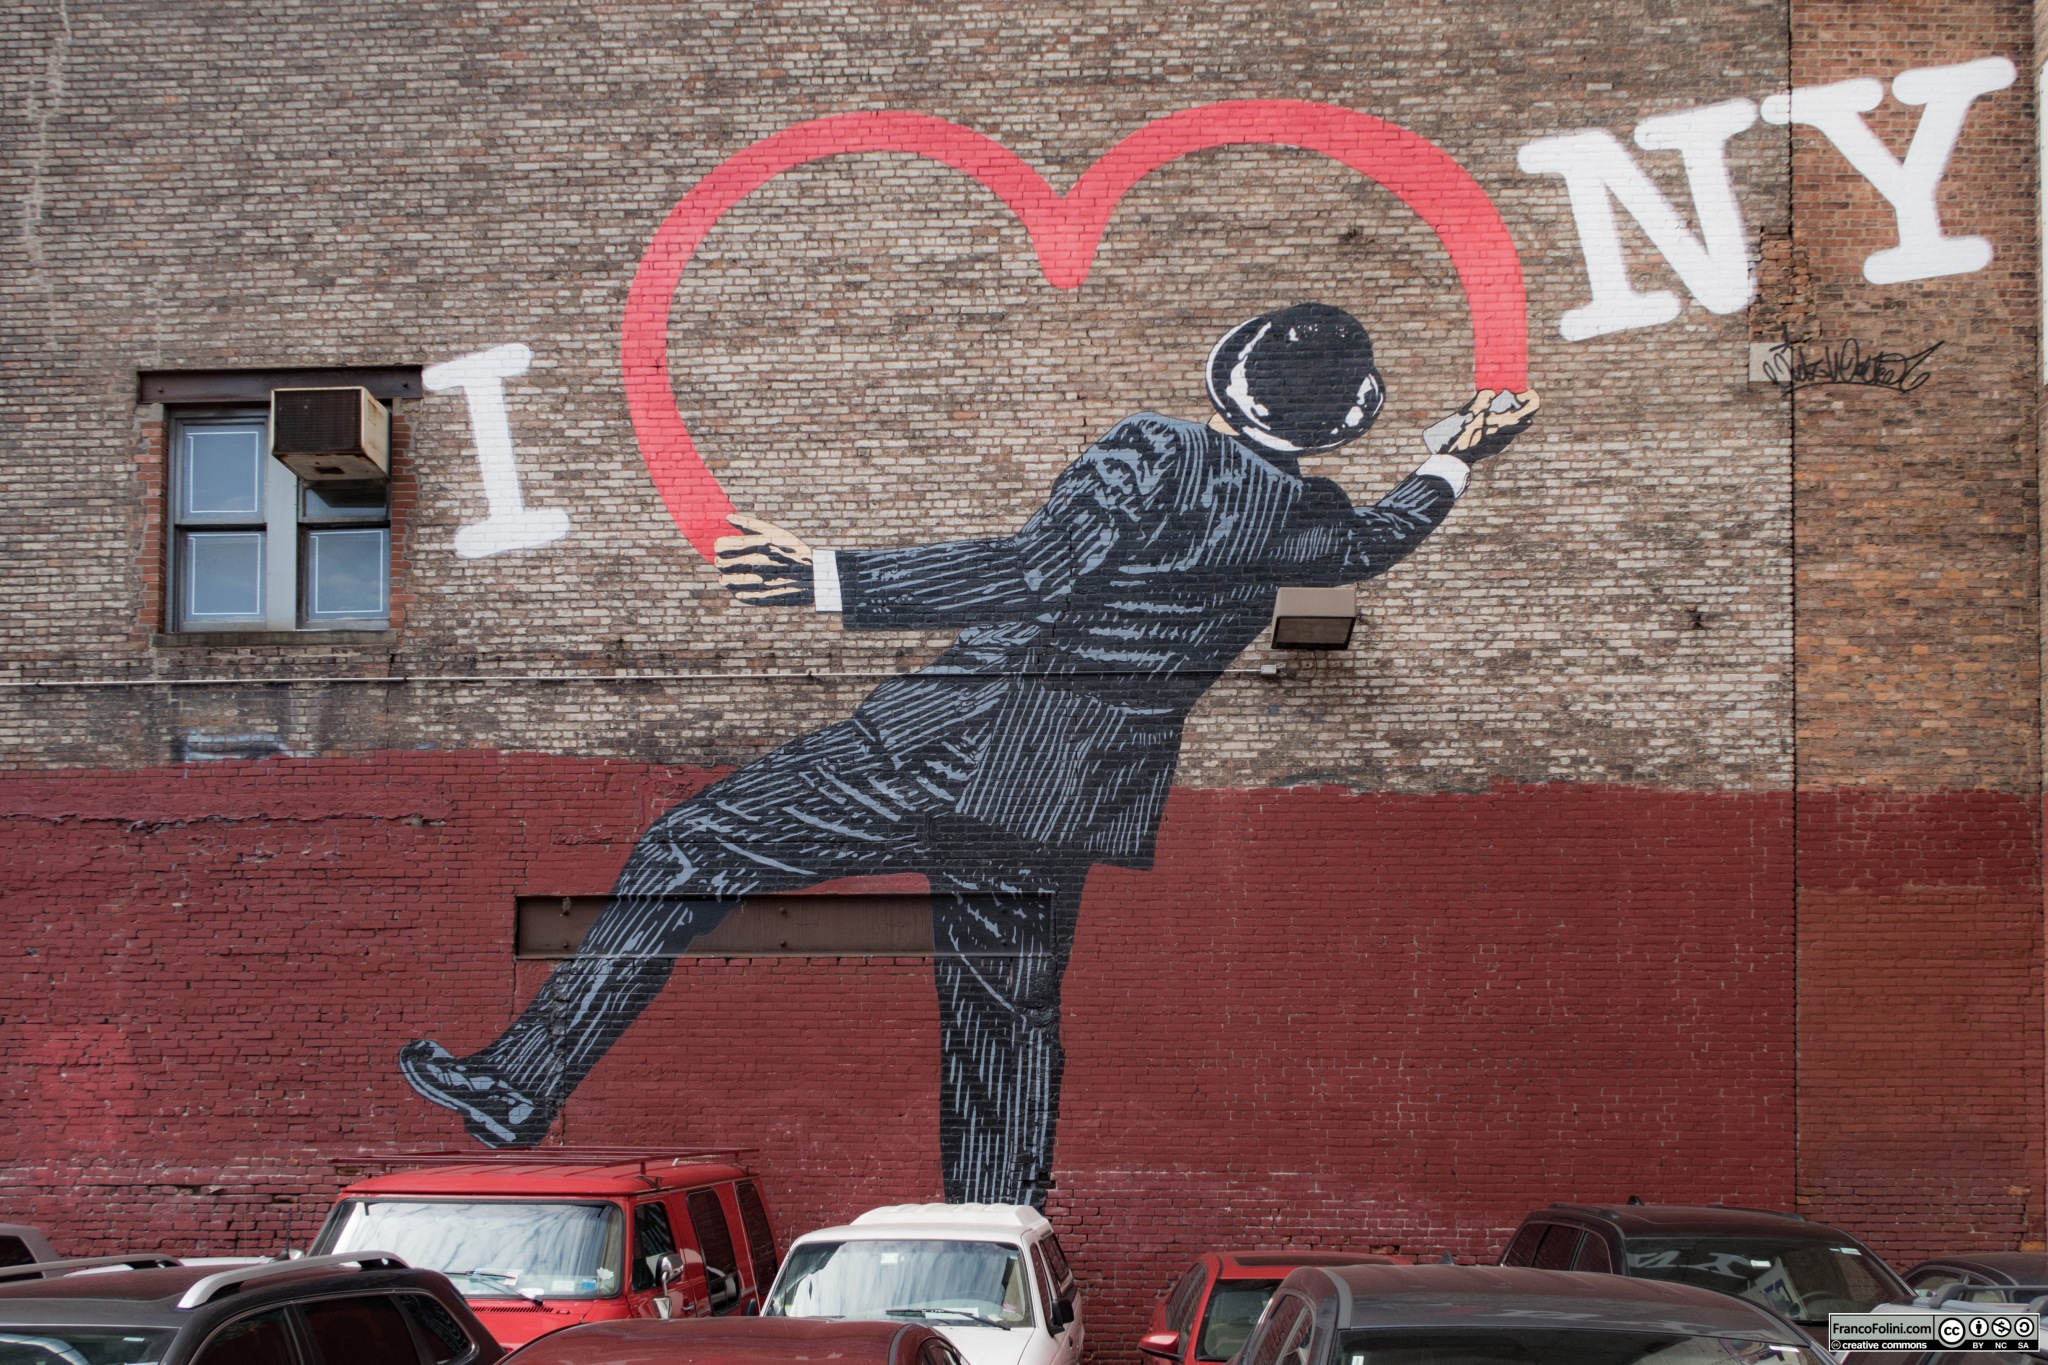 "I Love New York" by Nick Walker, 17th Street and 6th Ave, Flatiron District, Manhattan, New York